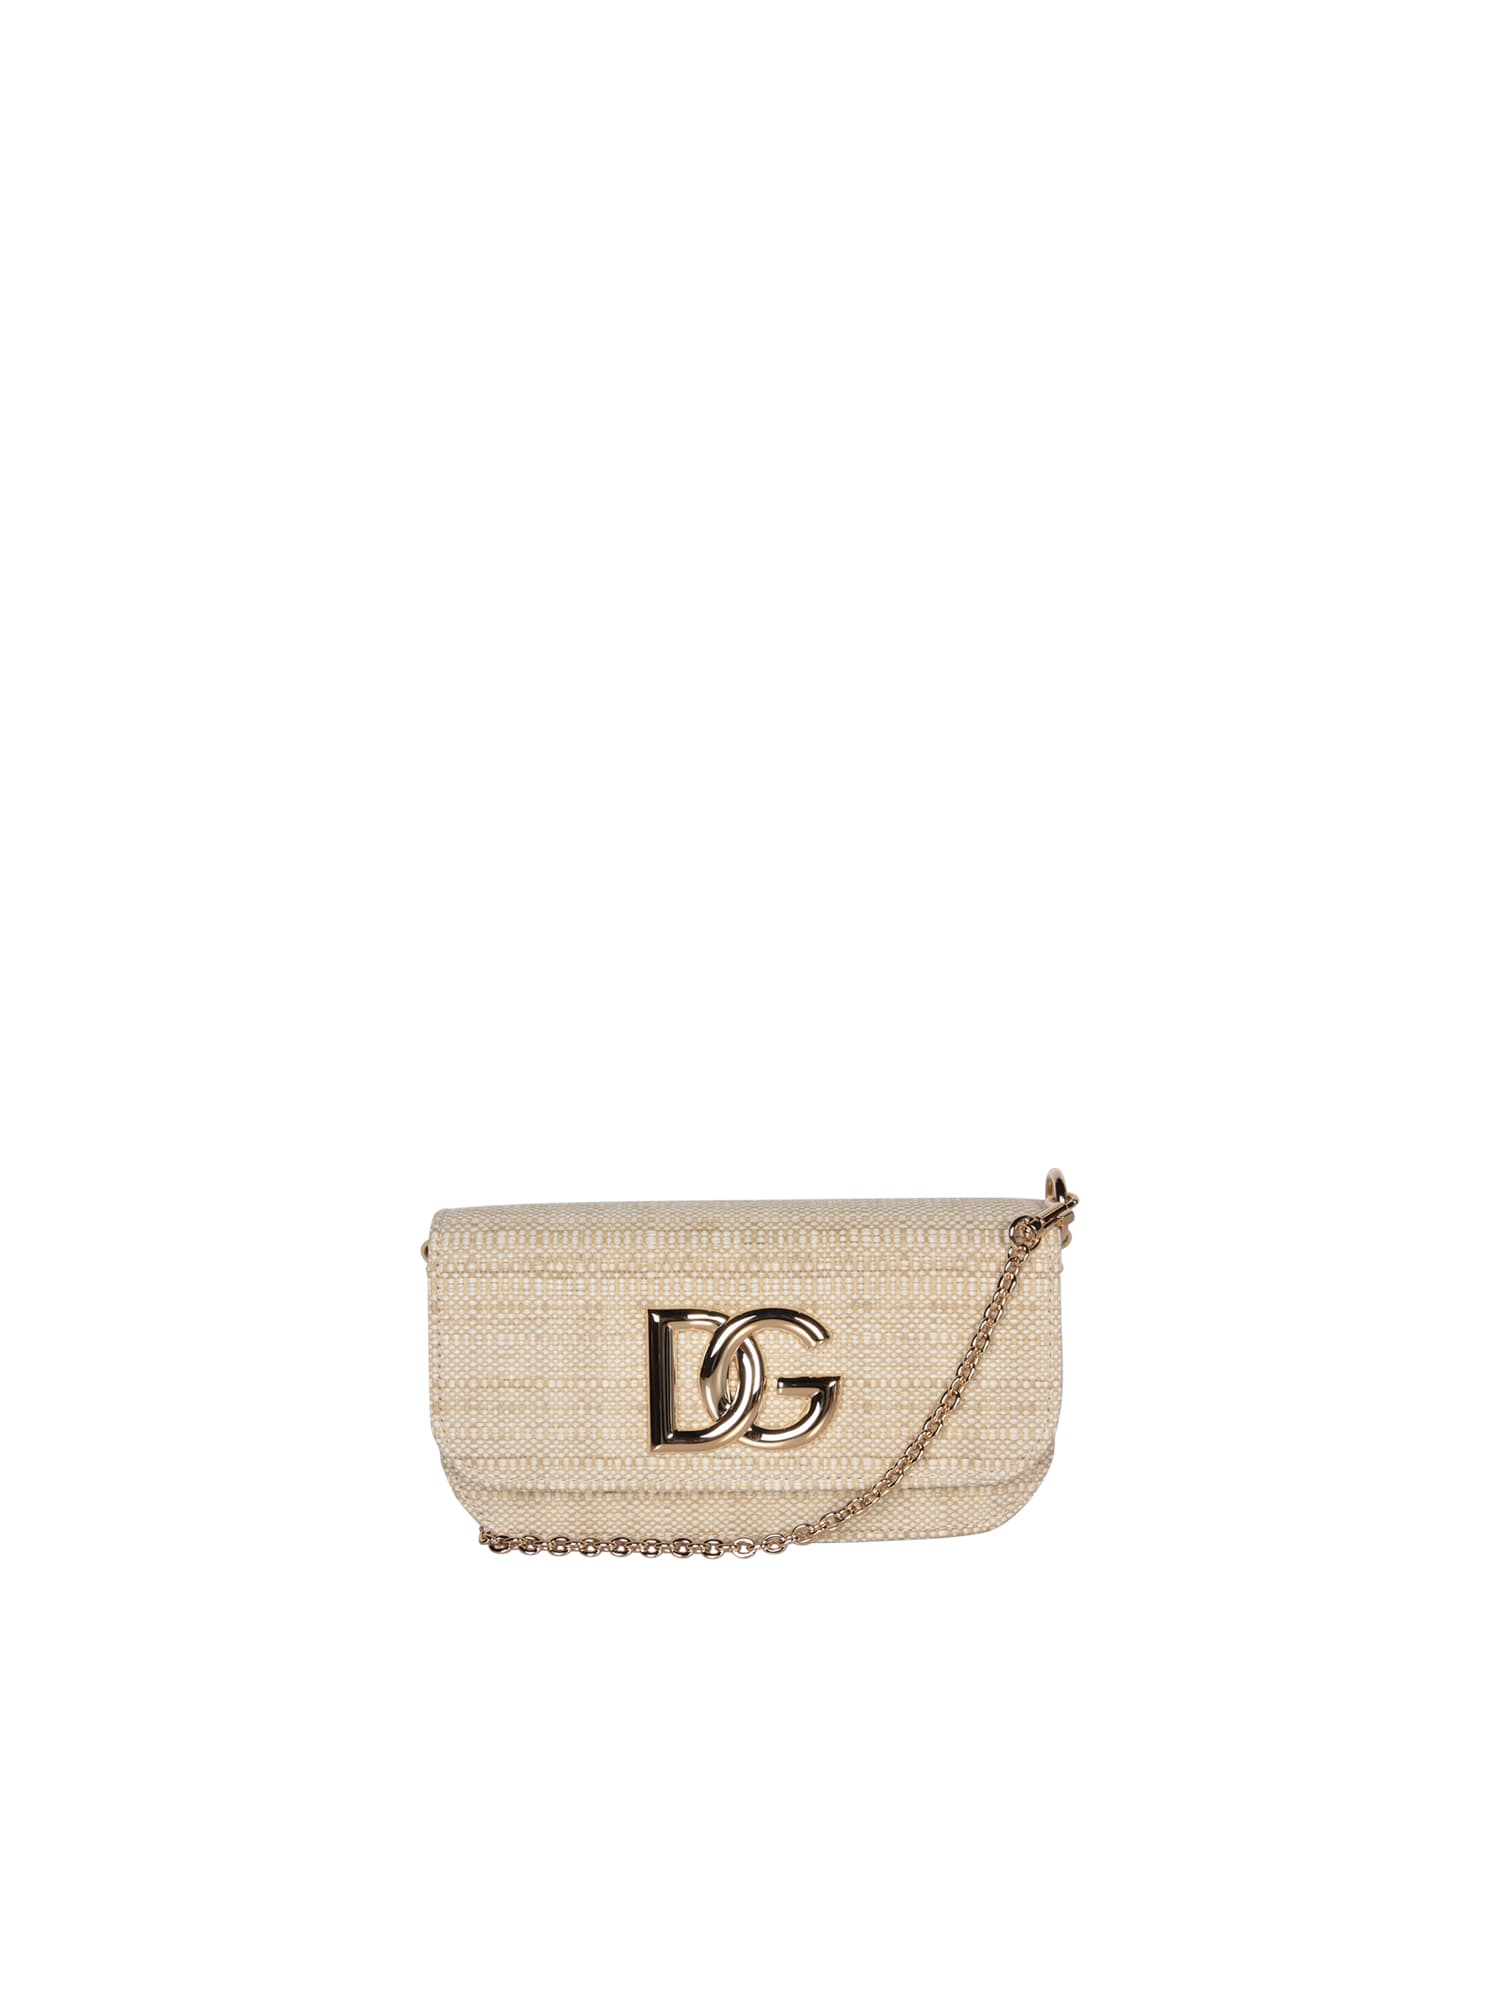 Dolce & Gabbana 3.5 Beige Cross-body Bag